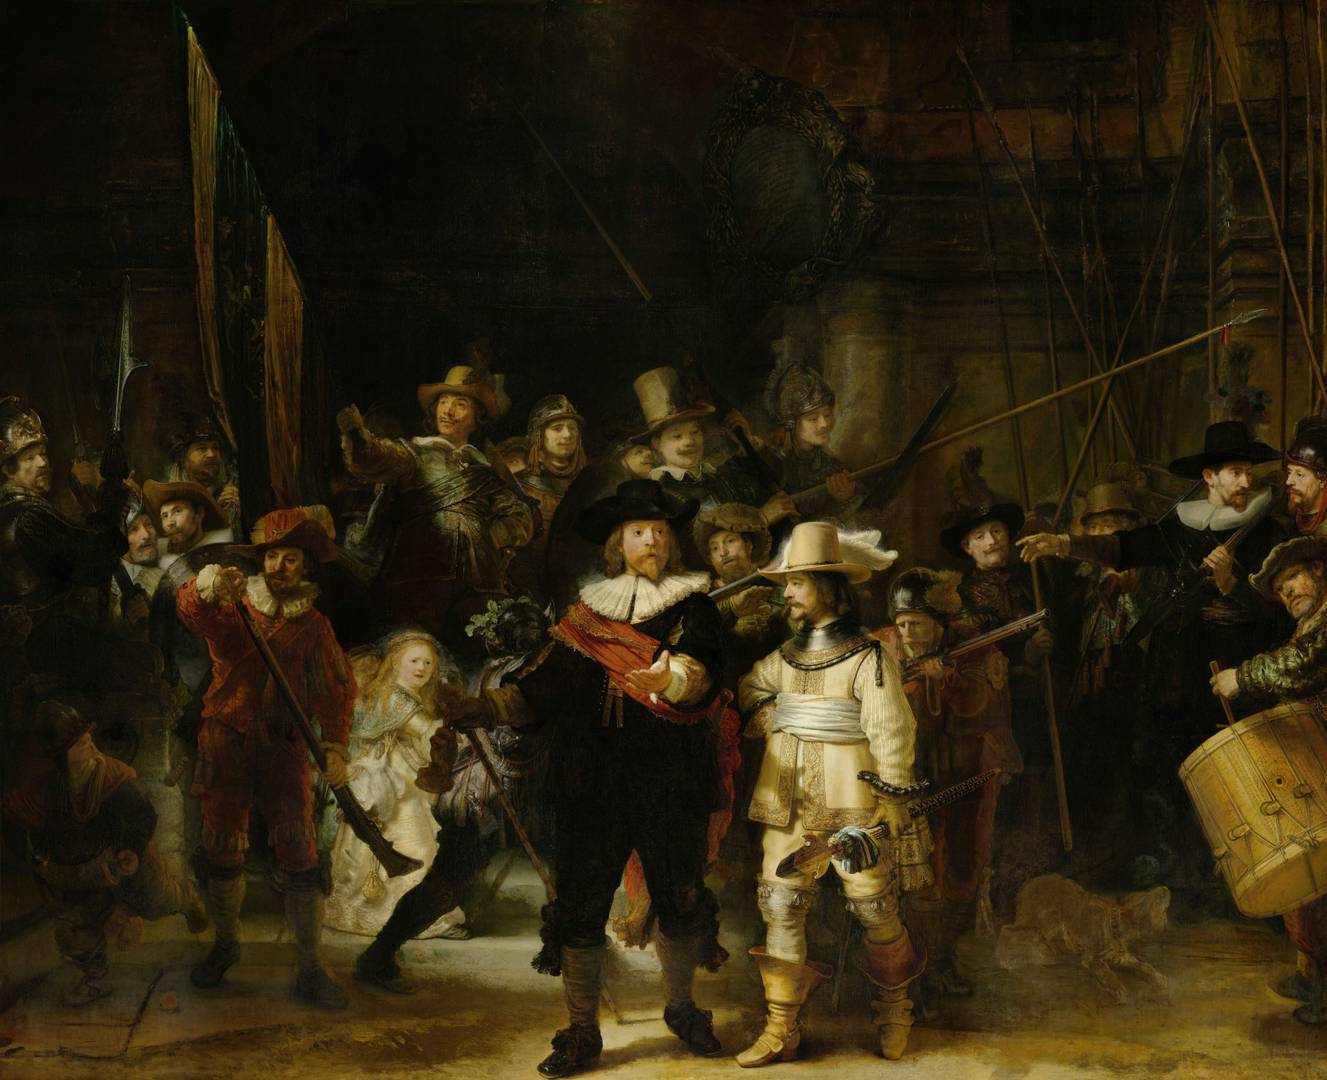 Рембрандт Харменс ван Рейн. Ночной дозор. 1642